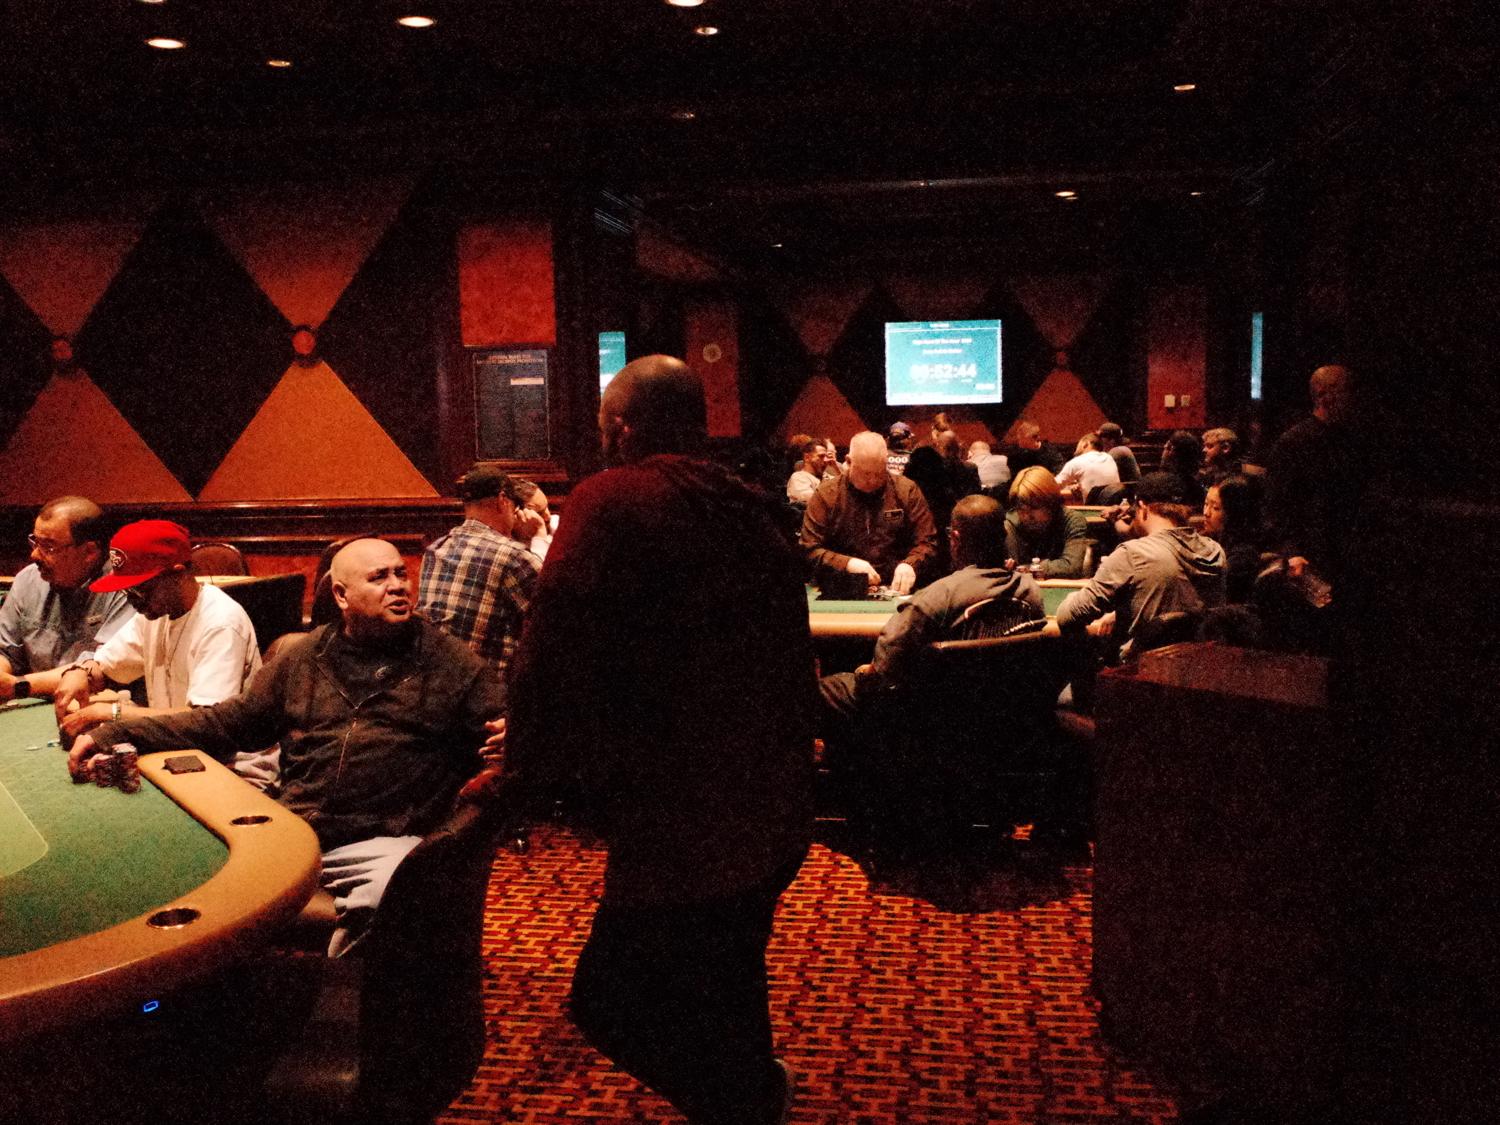 Evil poker room - high rollers